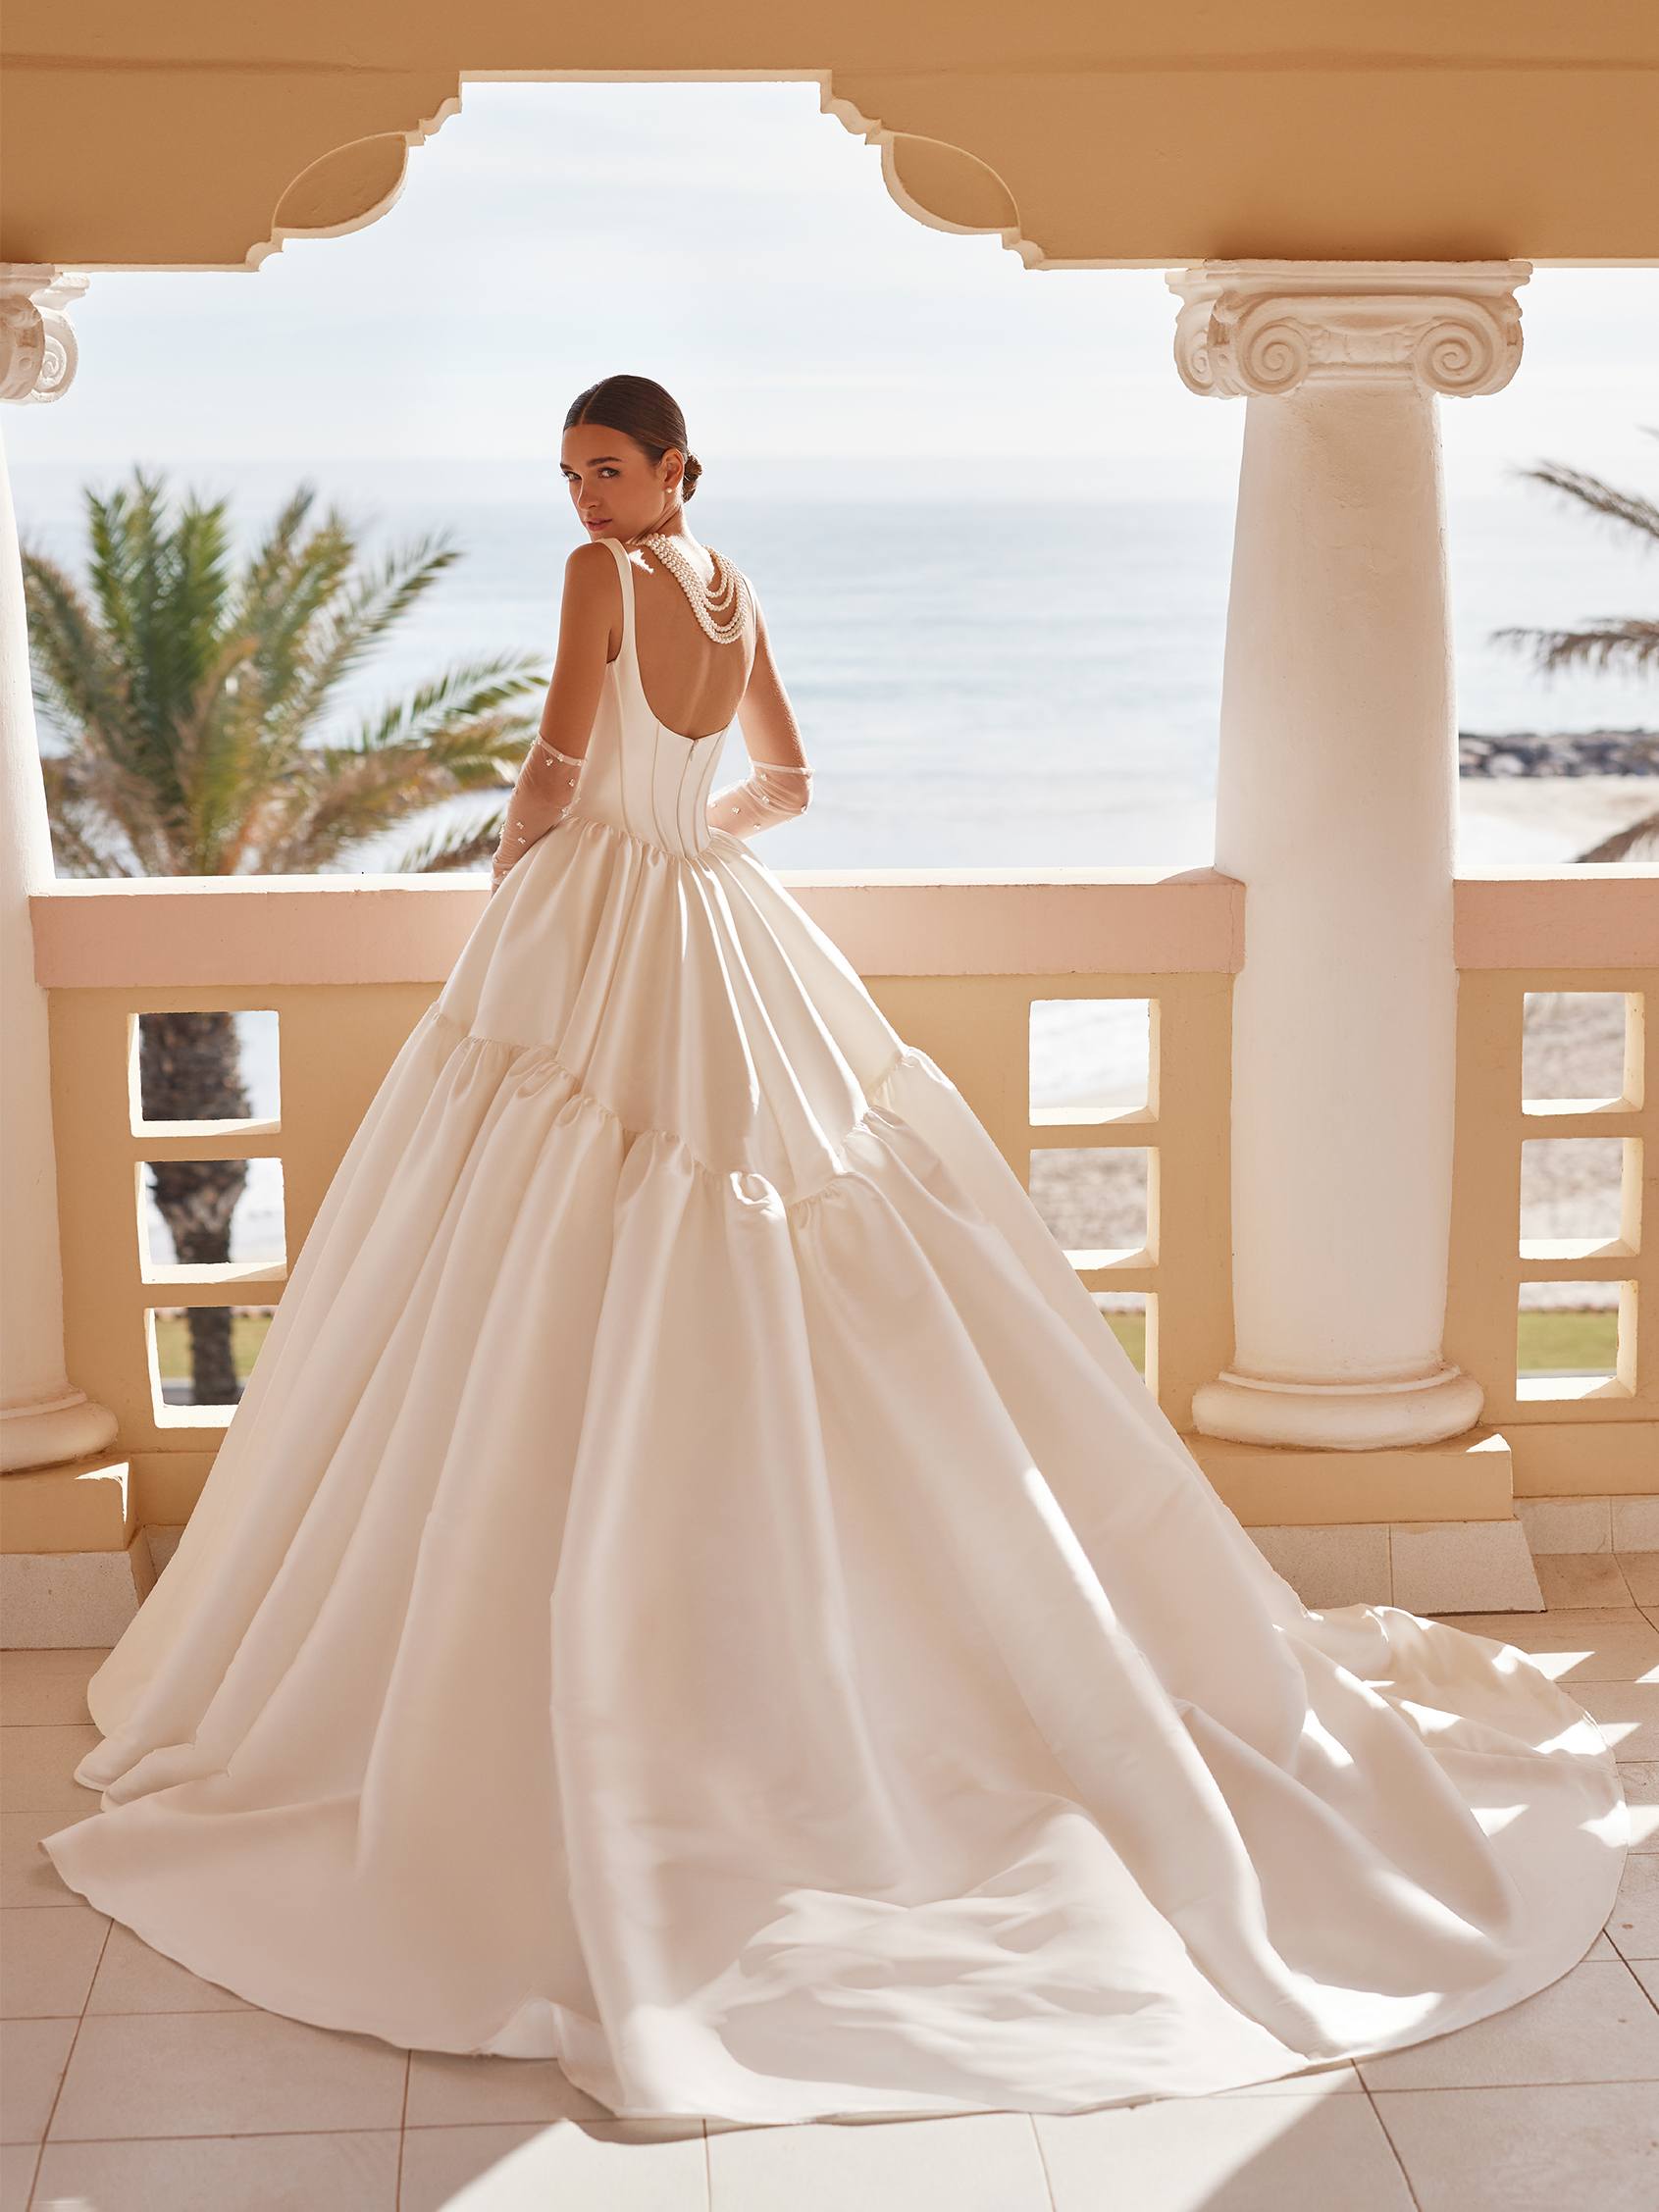 Roman Villa Wedding | Floral wedding gown, Floral wedding dress, Floral  print wedding dress